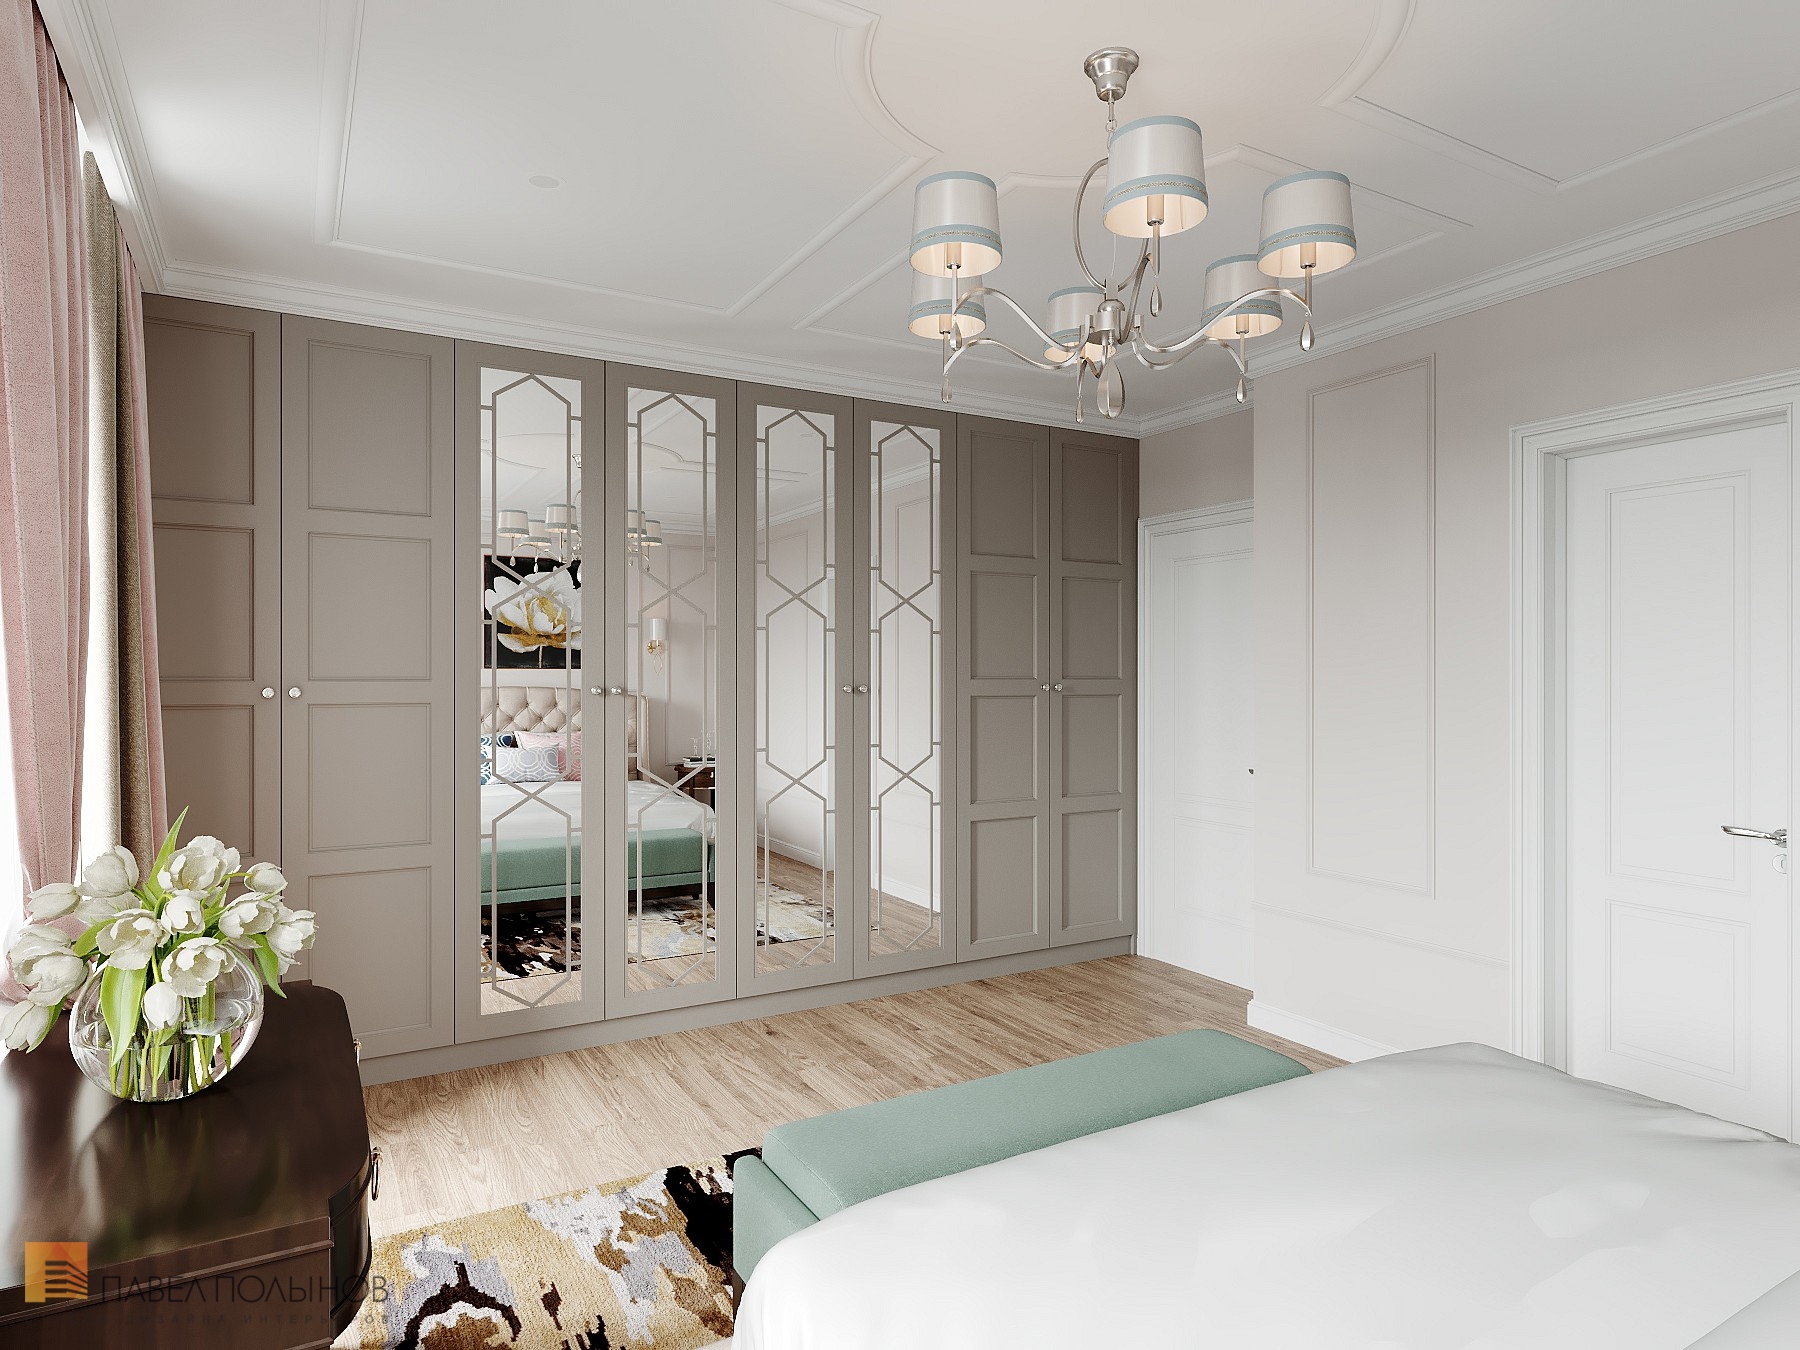 Фото интерьер спальни из проекта «Интерьер квартиры 140 кв.м. в стиле неоклассики»